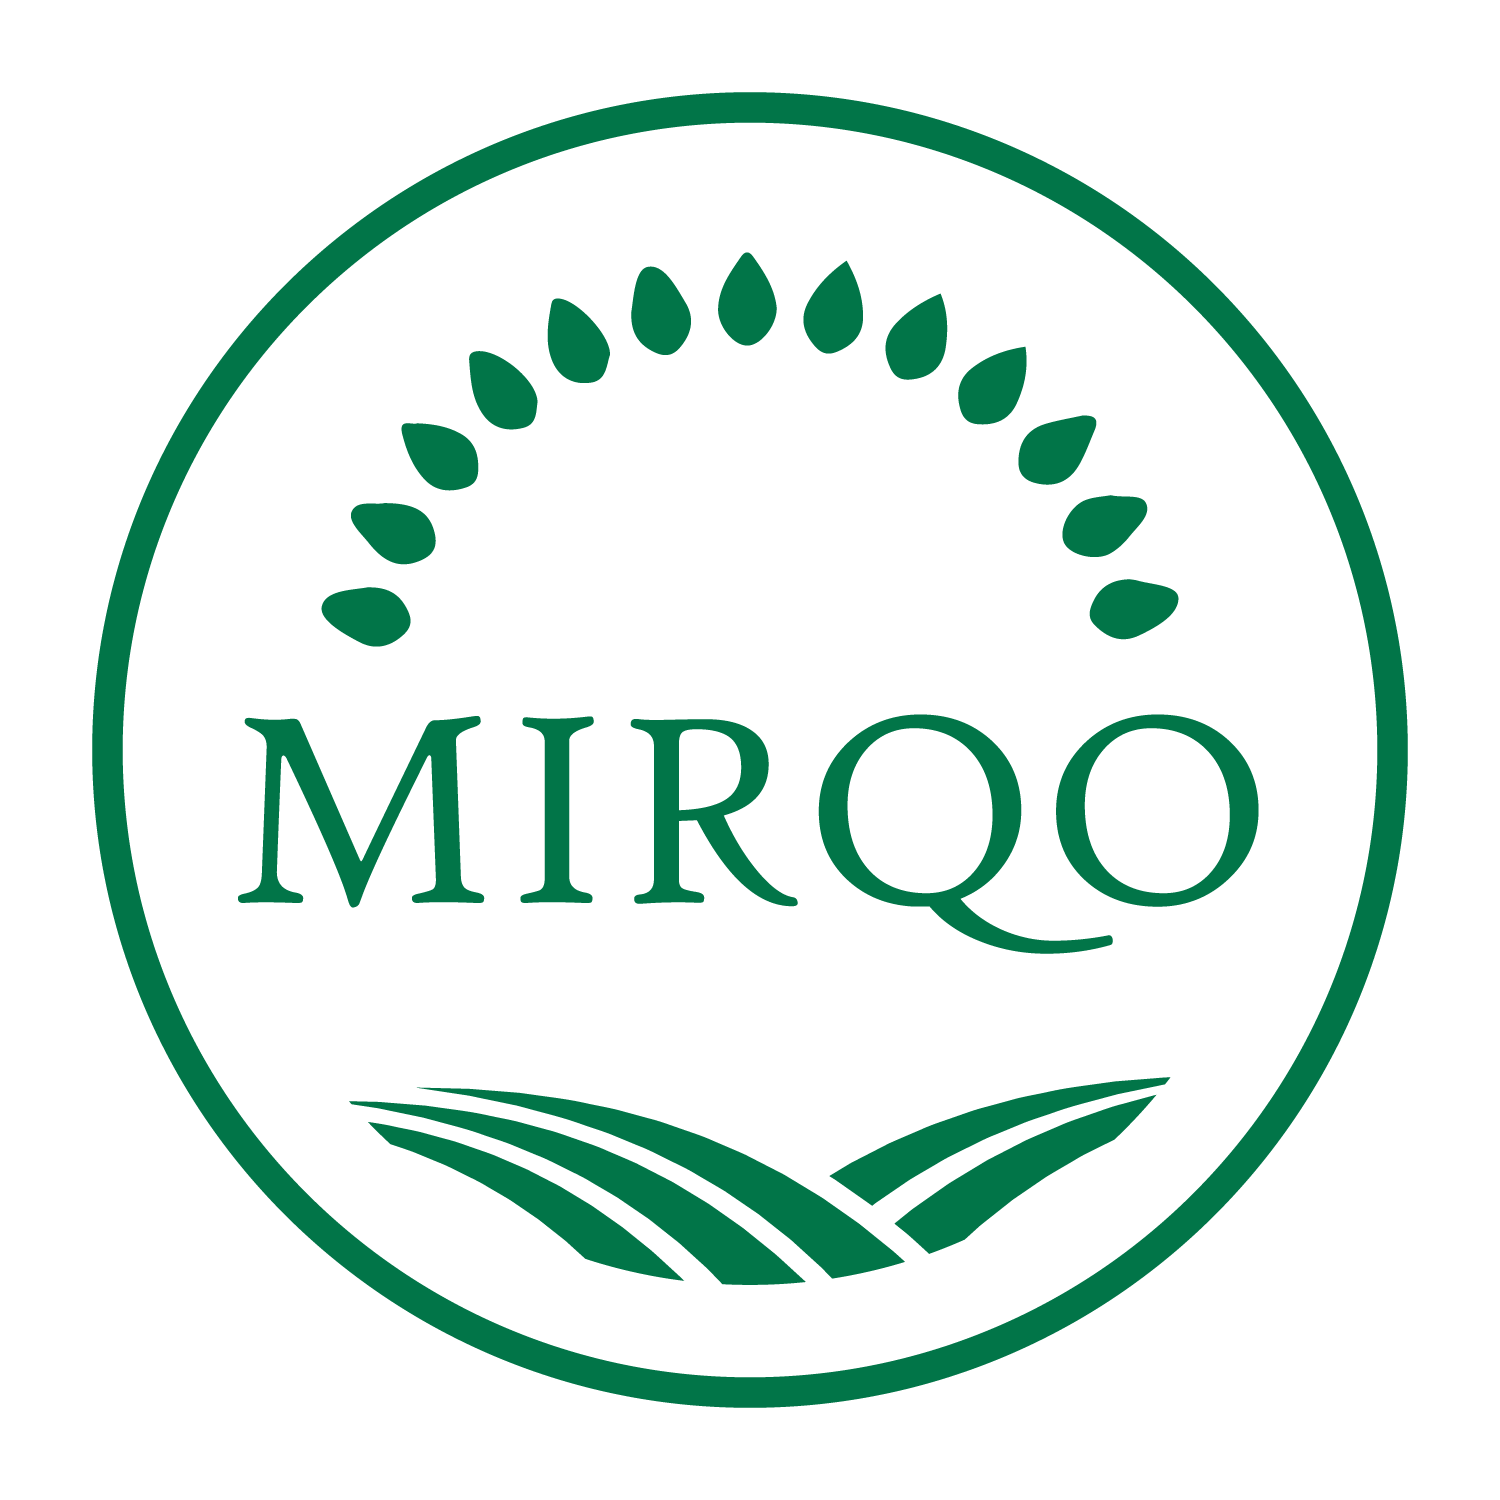 Mirqo International